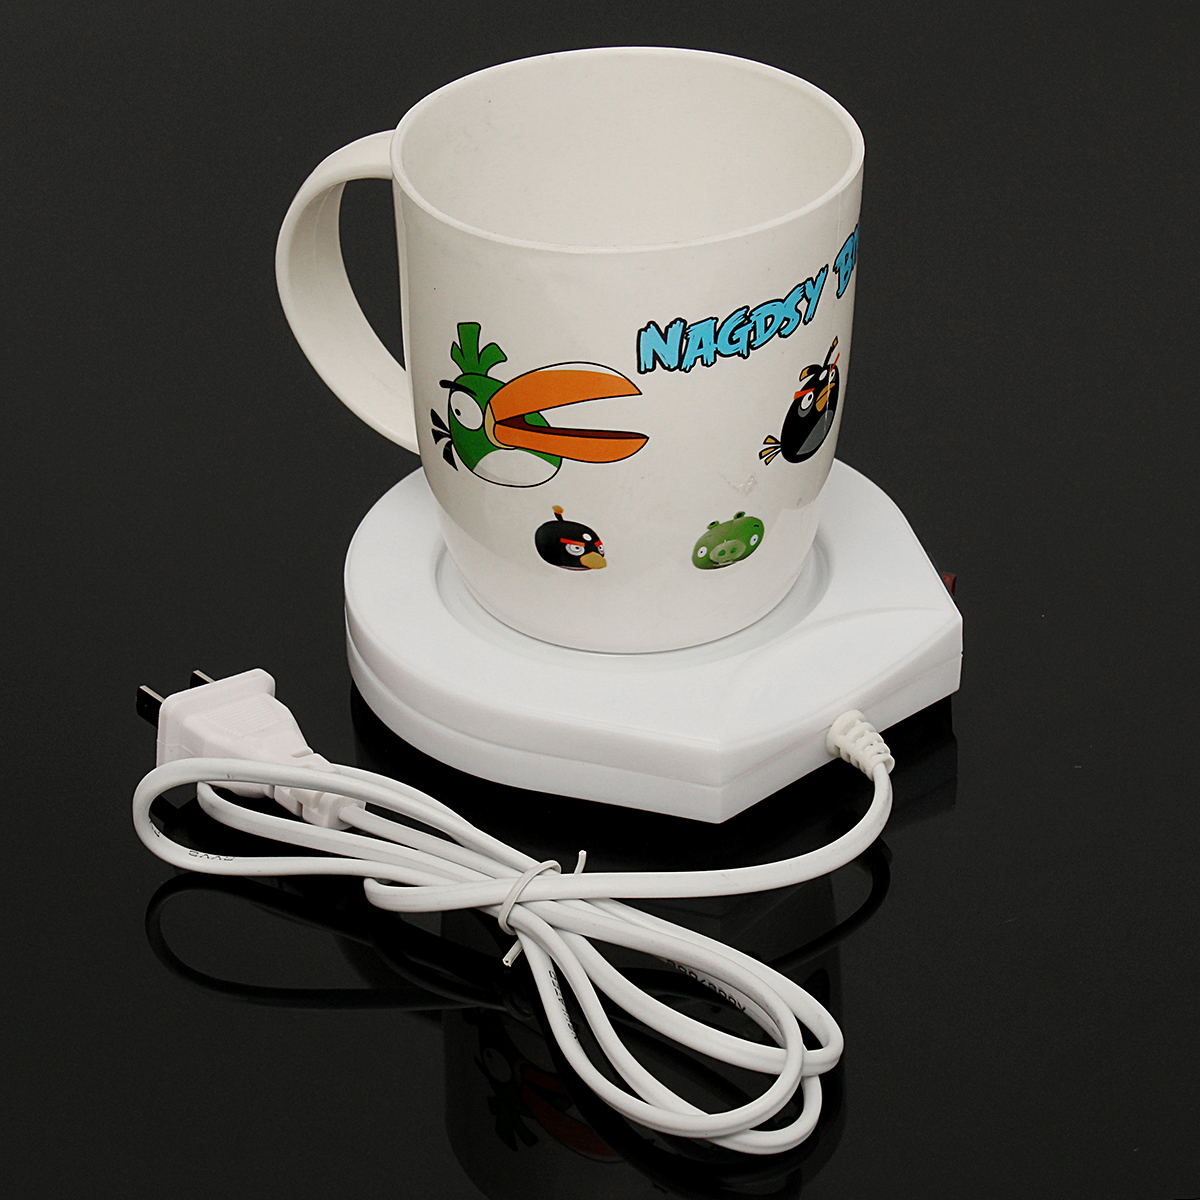 220v White Electric Powered Cup Warmer Heater Pad Coffee Tea Milk Mug US Plug 13